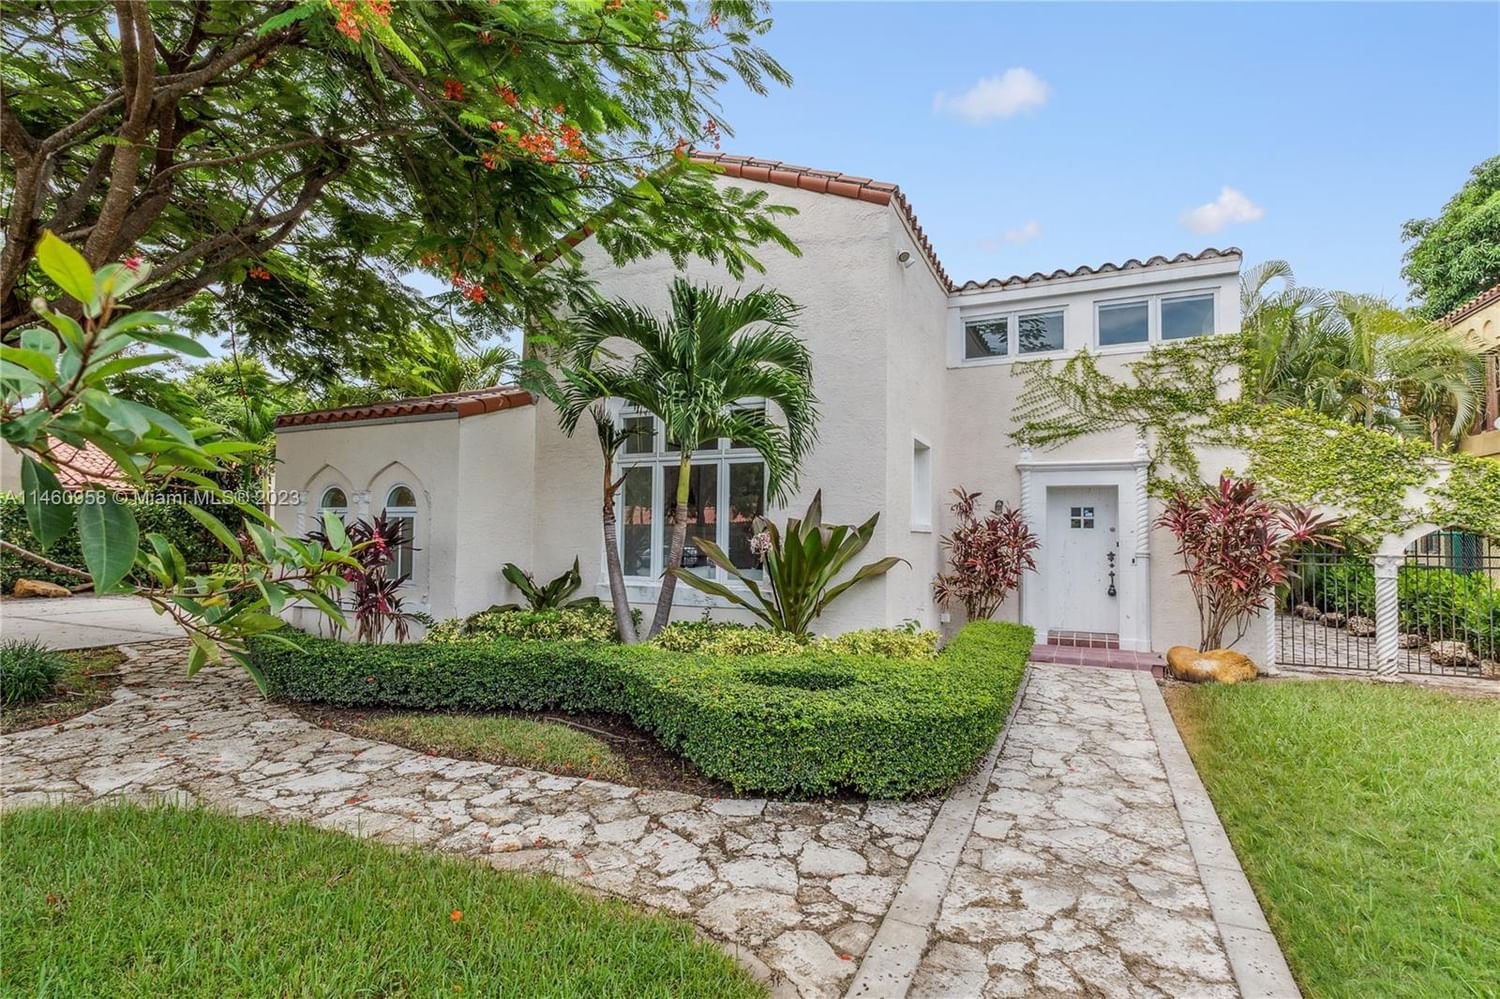 Real estate property located at 4119 16th St, Miami-Dade County, Miami, FL